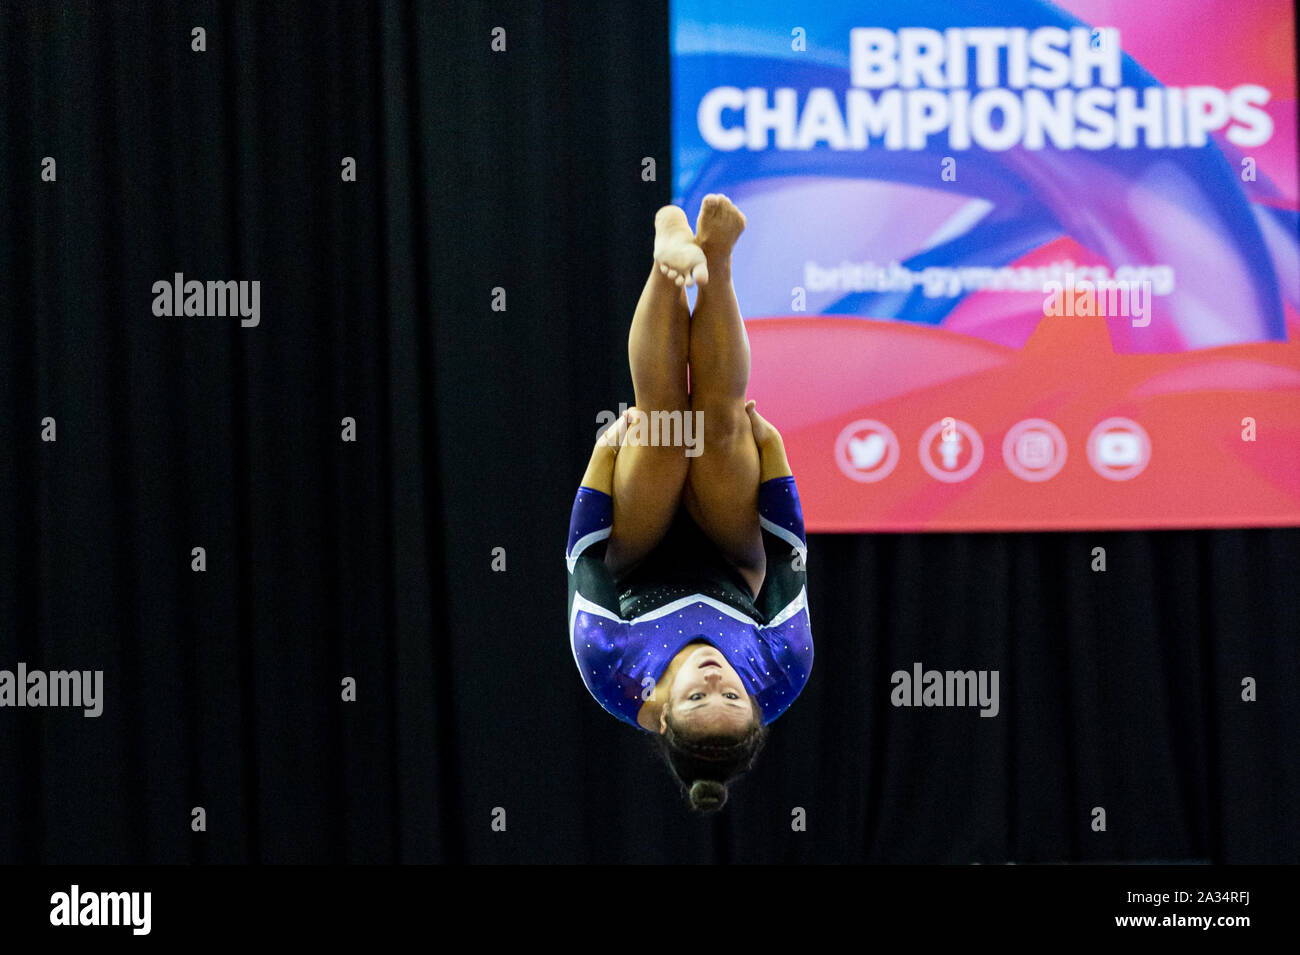 Birmingham, England, UK. 28 September 2019. Saskia Servini (Andover Gymnastics Club) in action during the Trampoline, Tumbling and DMT British Championship Qualifiers at the Arena Birmingham, Birmingham, UK. Stock Photo